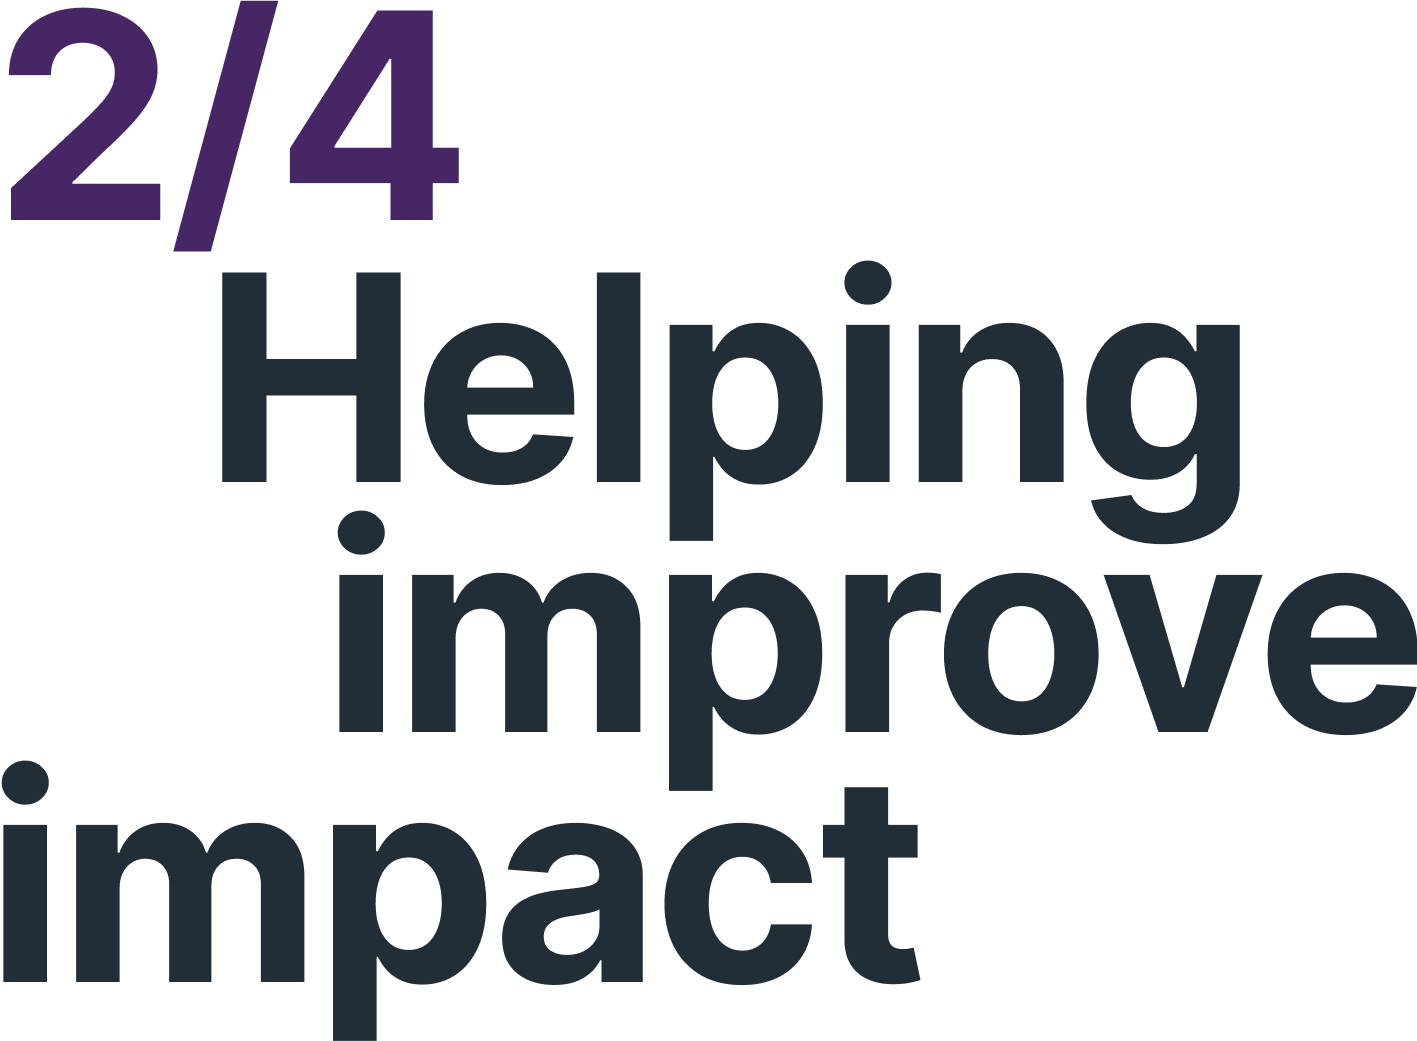 2/4 Helping improve impact